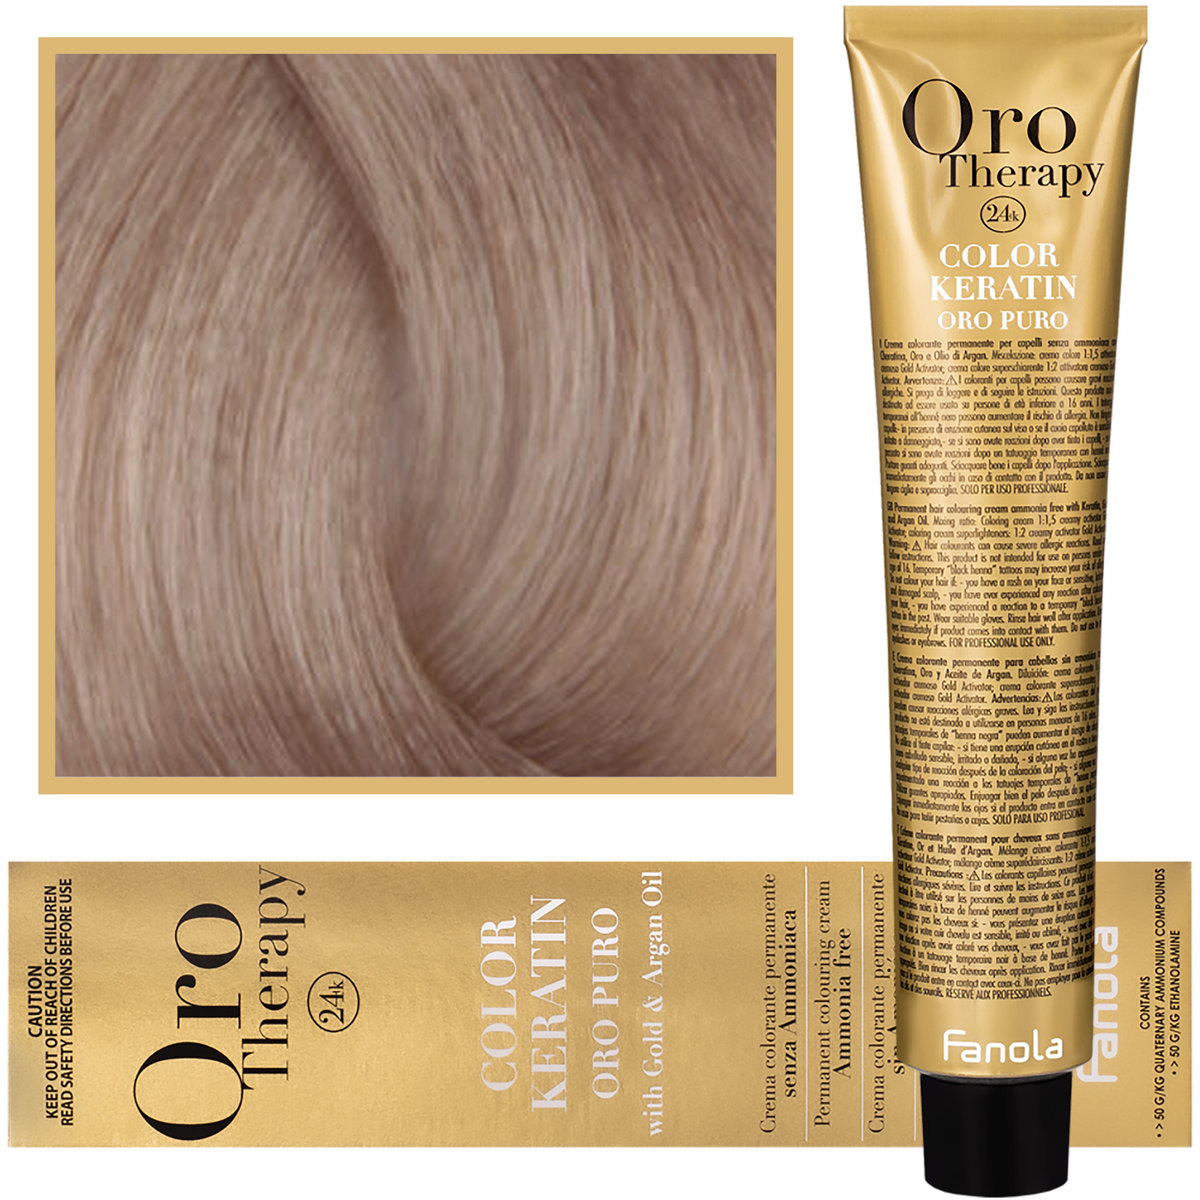 Fanola 9.13 Oro Puro Therapy Keratin Color 100 ML bardzo jasny blond beżowy HC-18-25